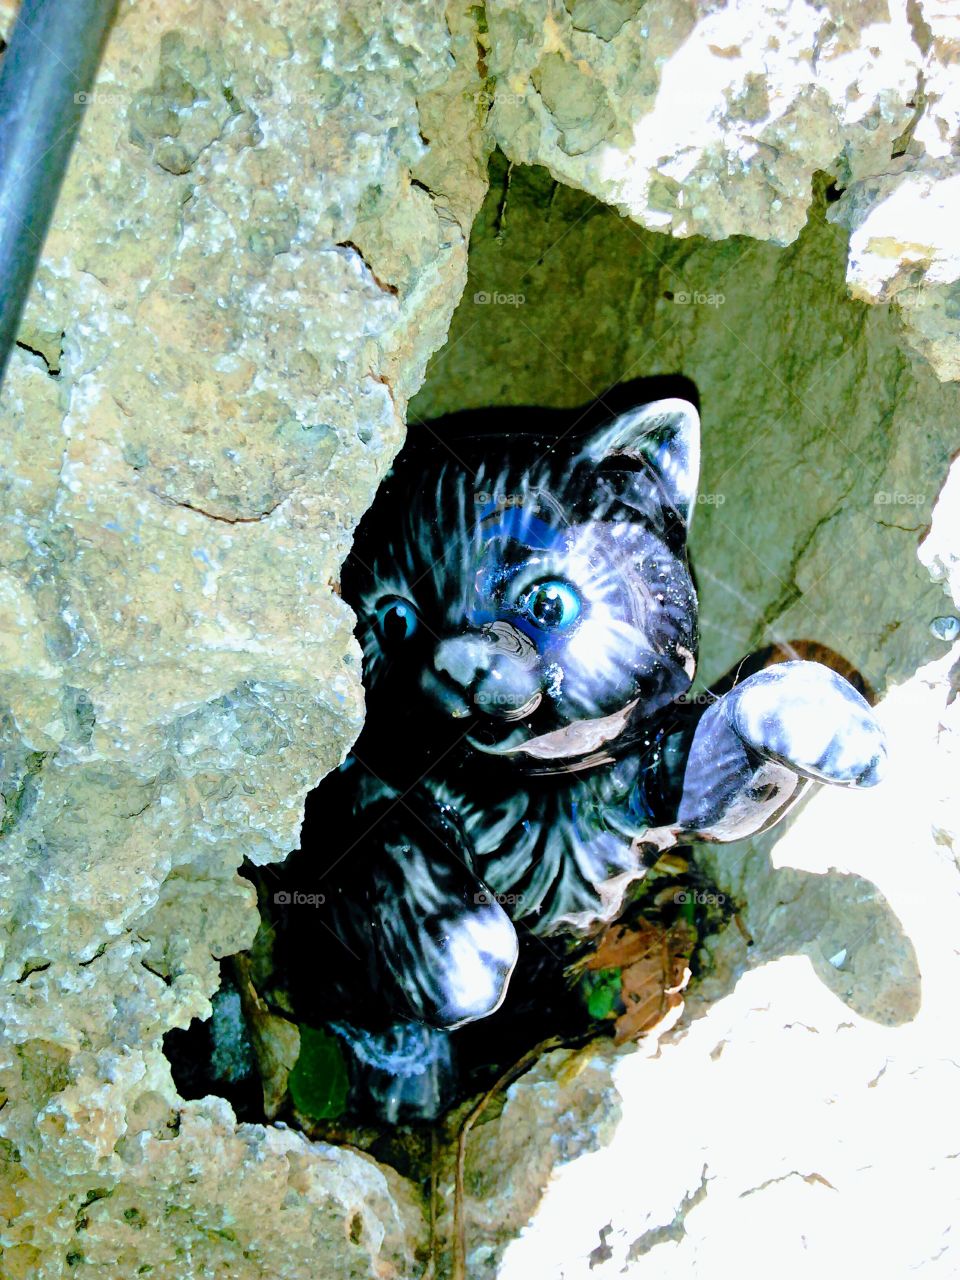 Porcelain cat in a rock cave!